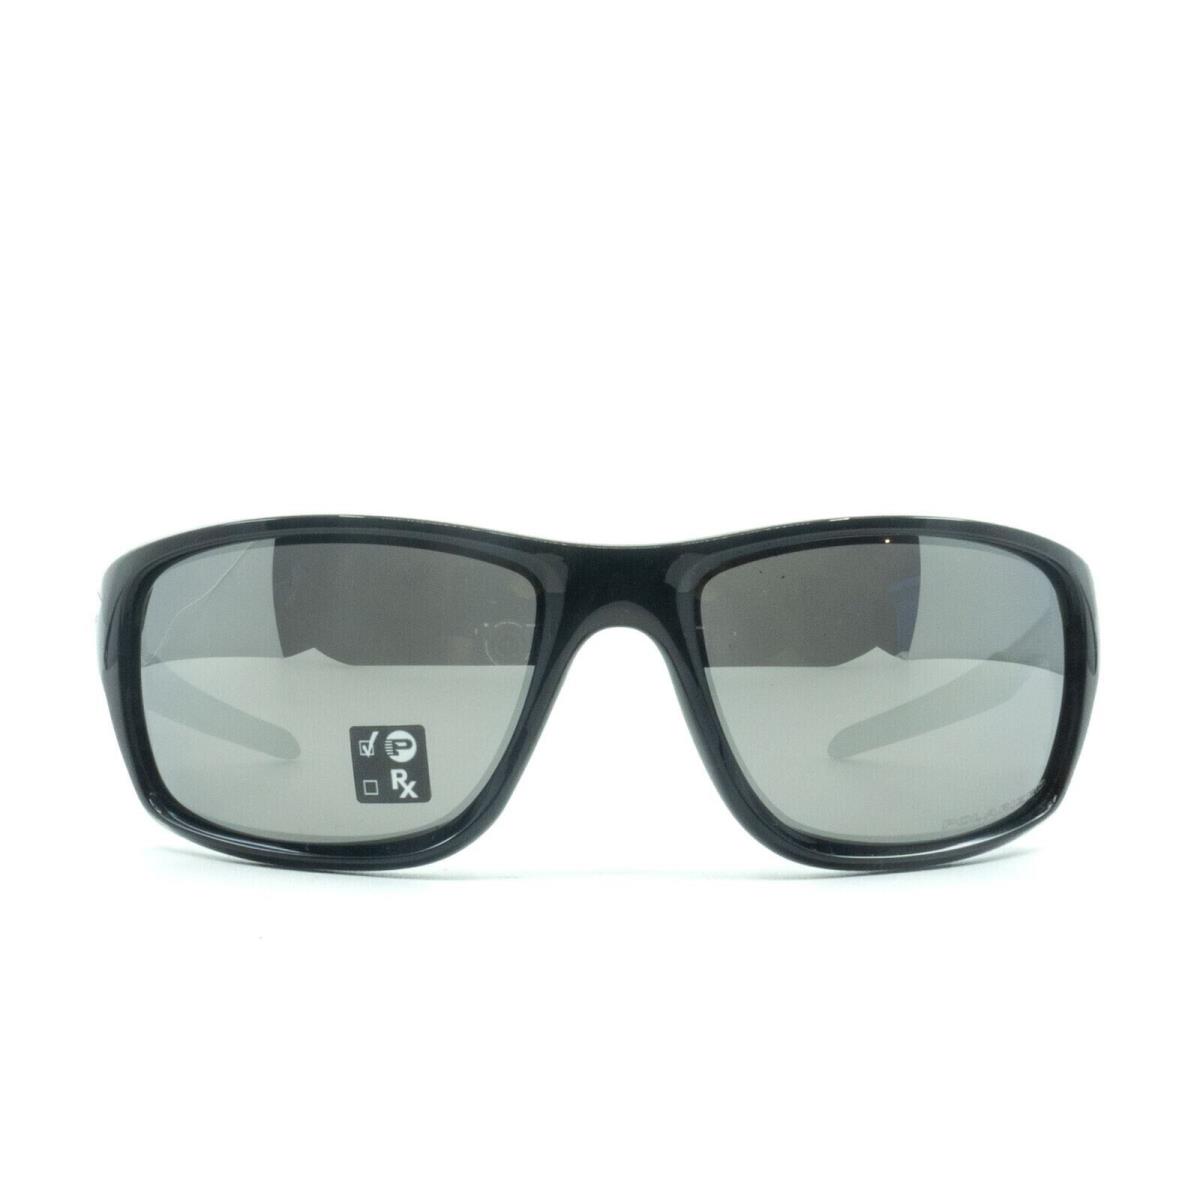 Oakley sunglasses Canteen - Black Frame, Black Lens 2